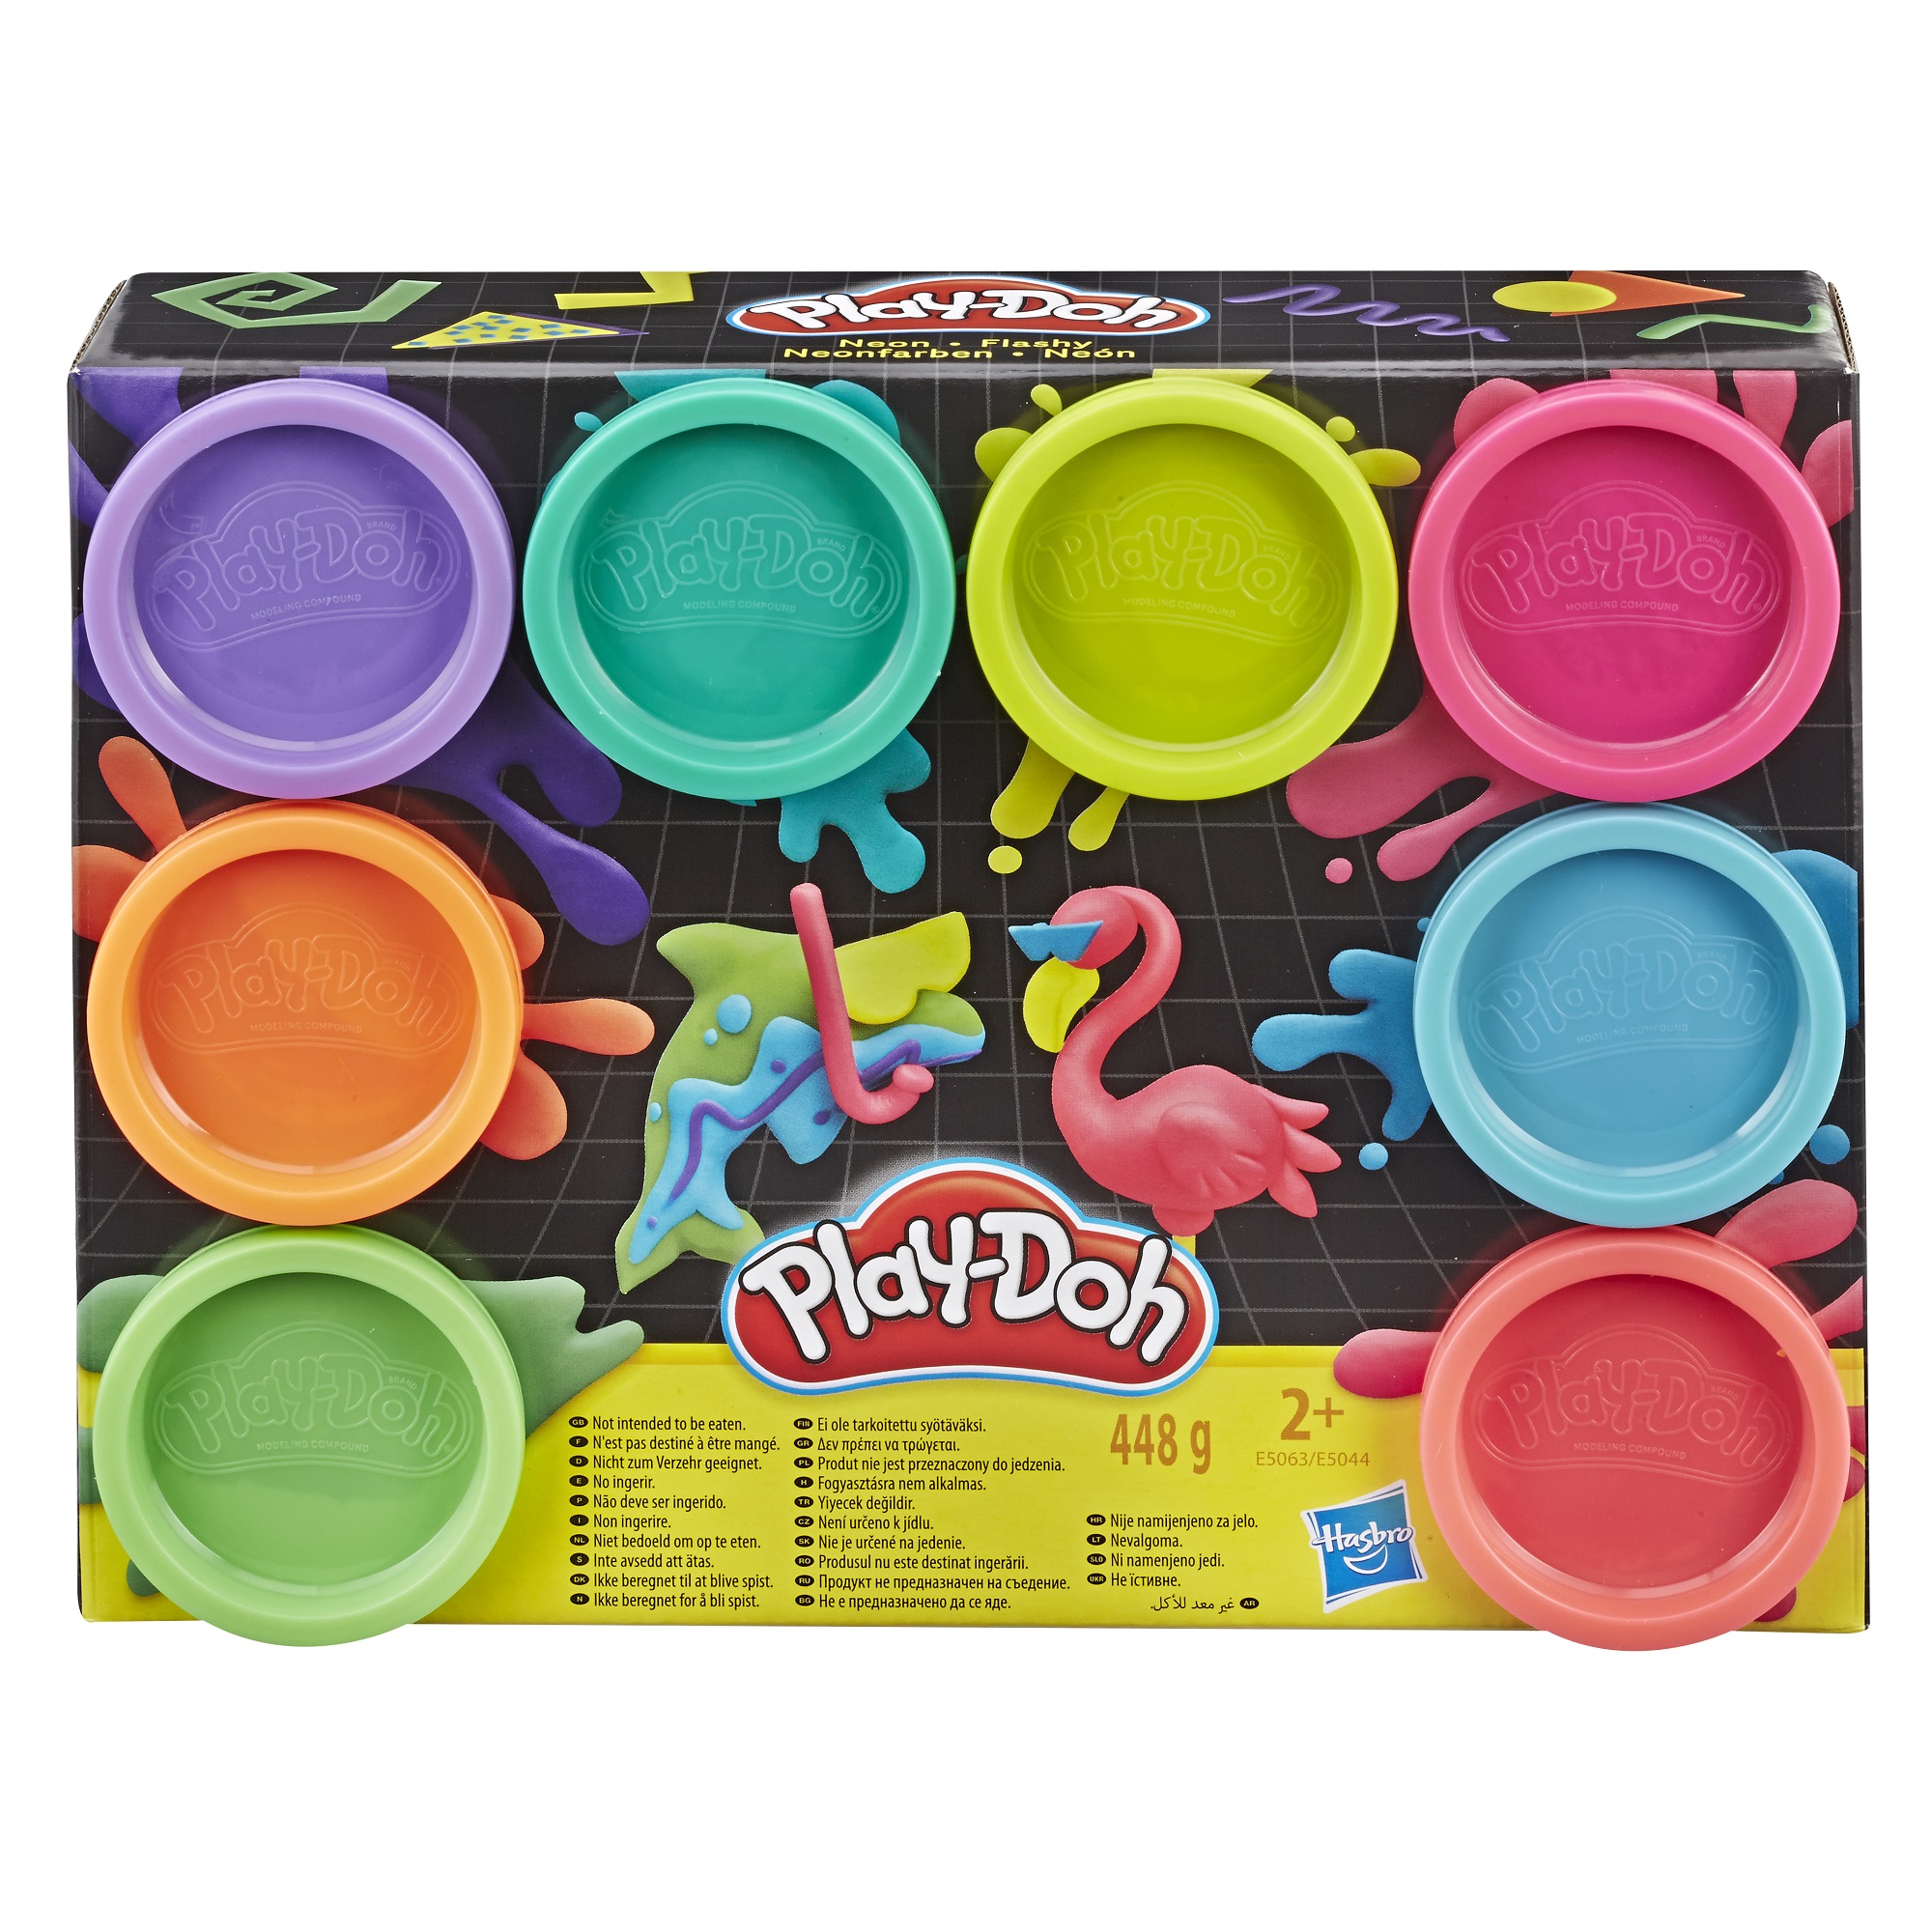 Большой набор пластилина. Набор для лепки Play-Doh Dino Crew. Play-Doh e4902. Набор e5044eu4 игровой 8 цветов Play-Doh.. Масса для лепки Play-Doh набор Rainbow 8 цветов e5062/e5044.